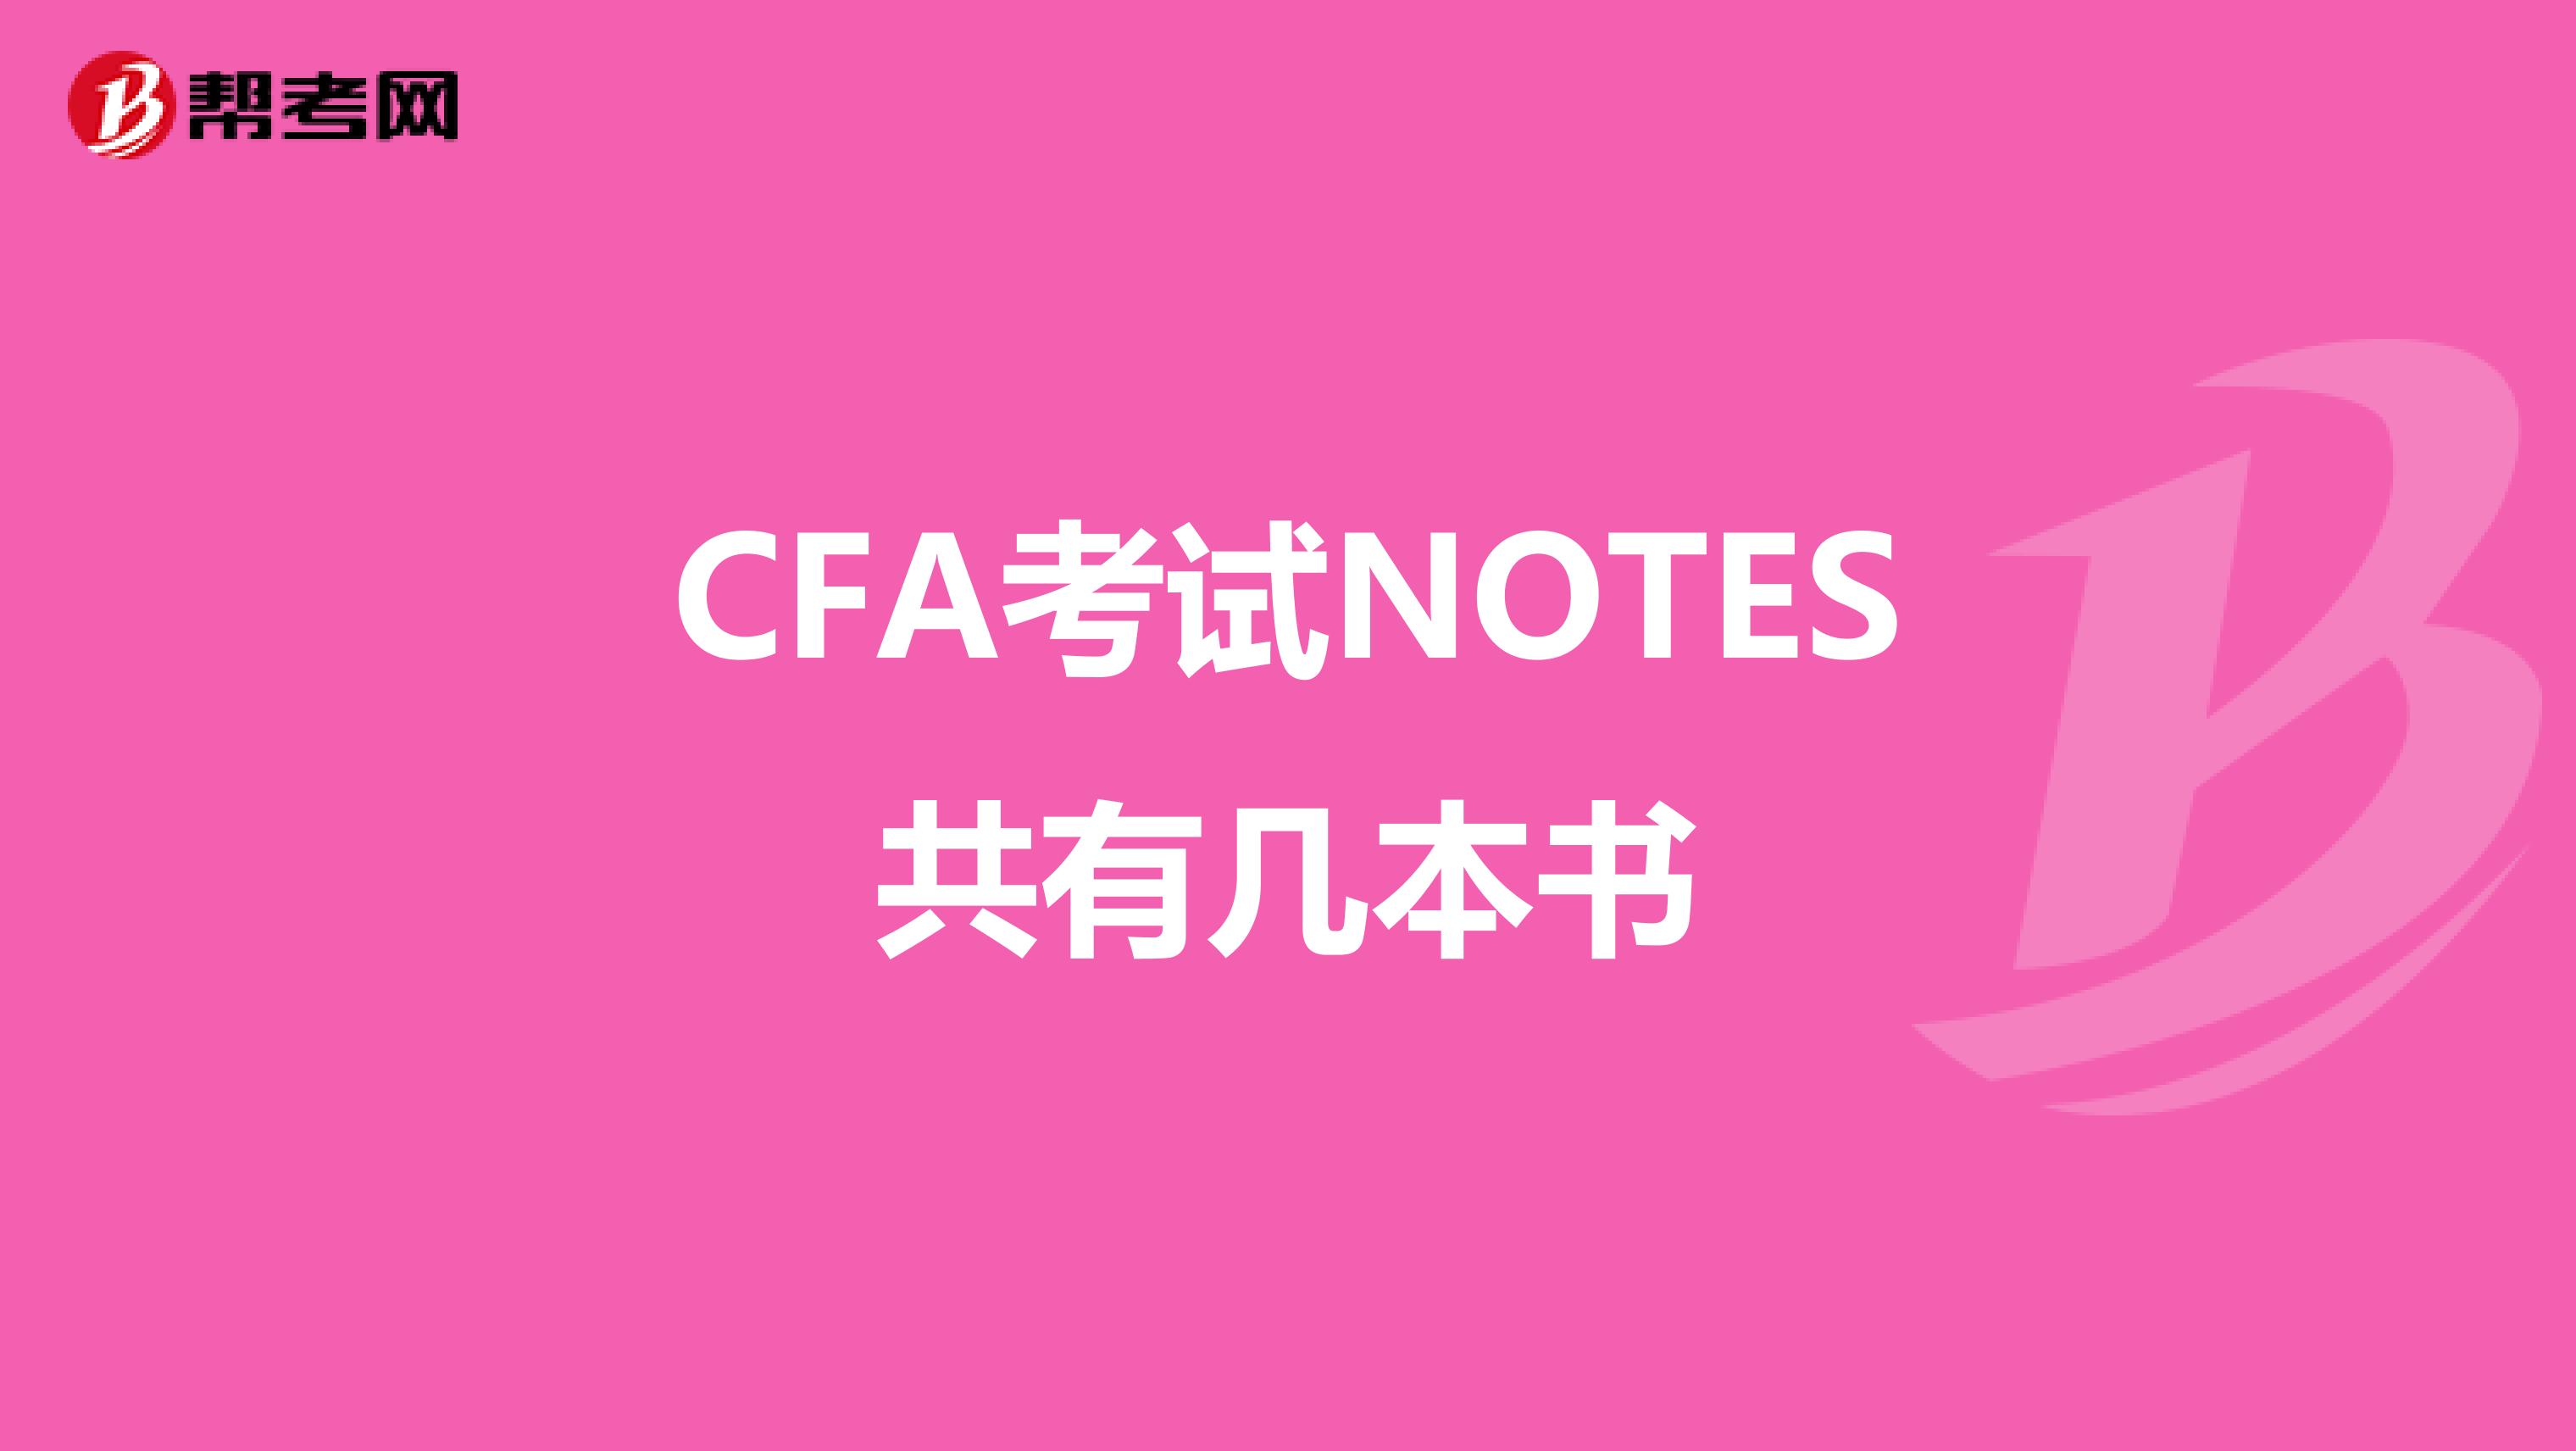 CFA考试NOTES共有几本书